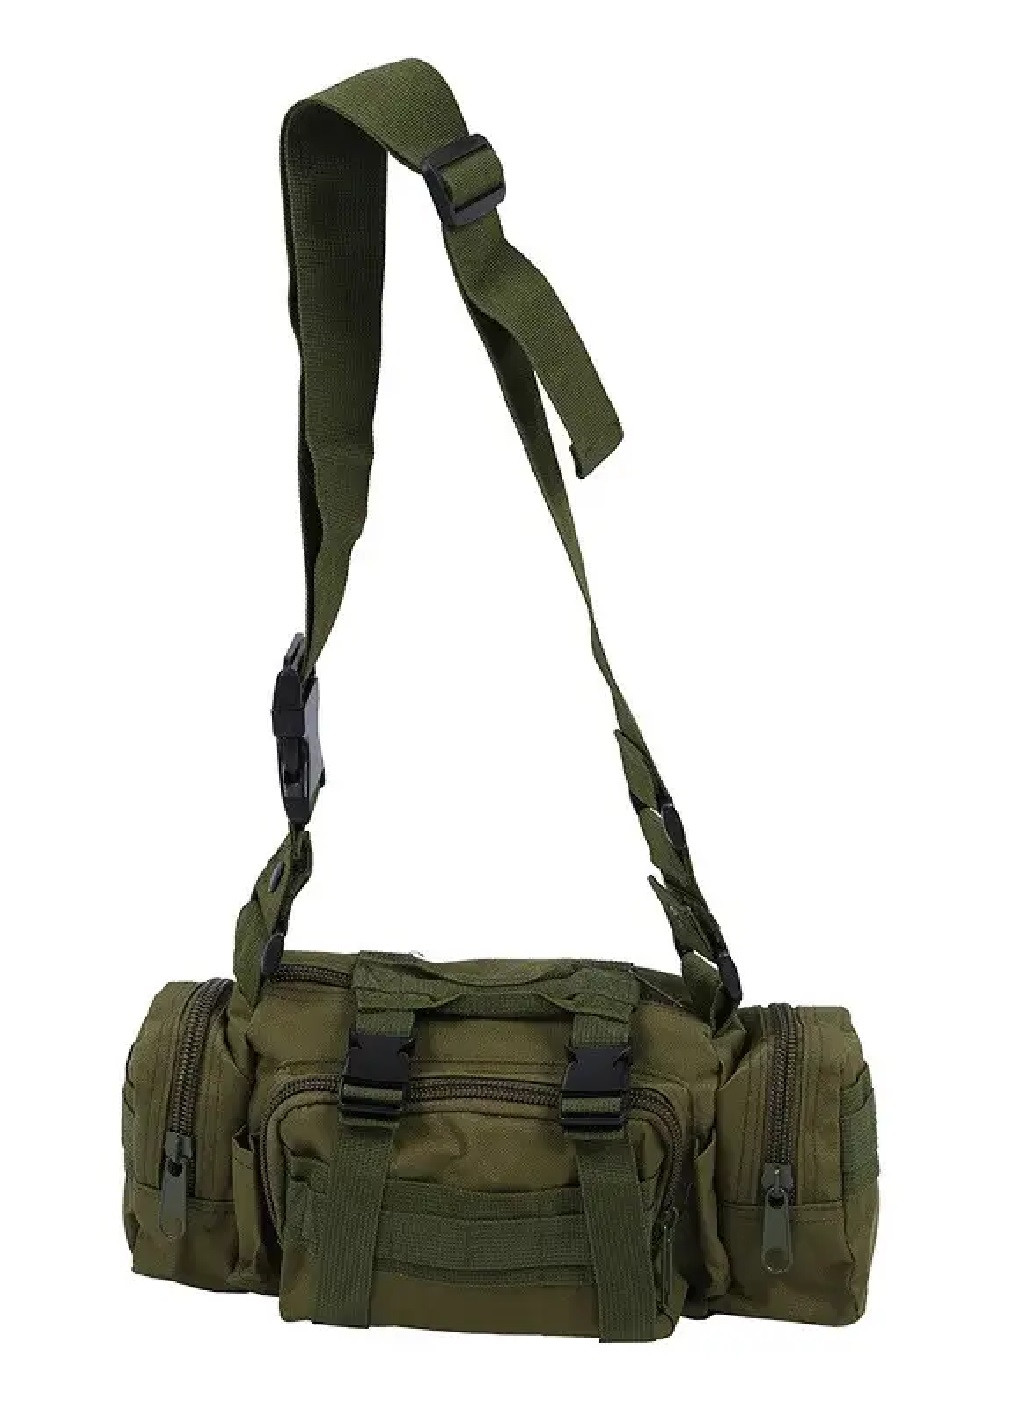 Тактическая сумка через плечо компактная армейская для рыбалки охоты туризма на 5 л 35х14х18 см (474206-Prob) Олива Unbranded (257597017)